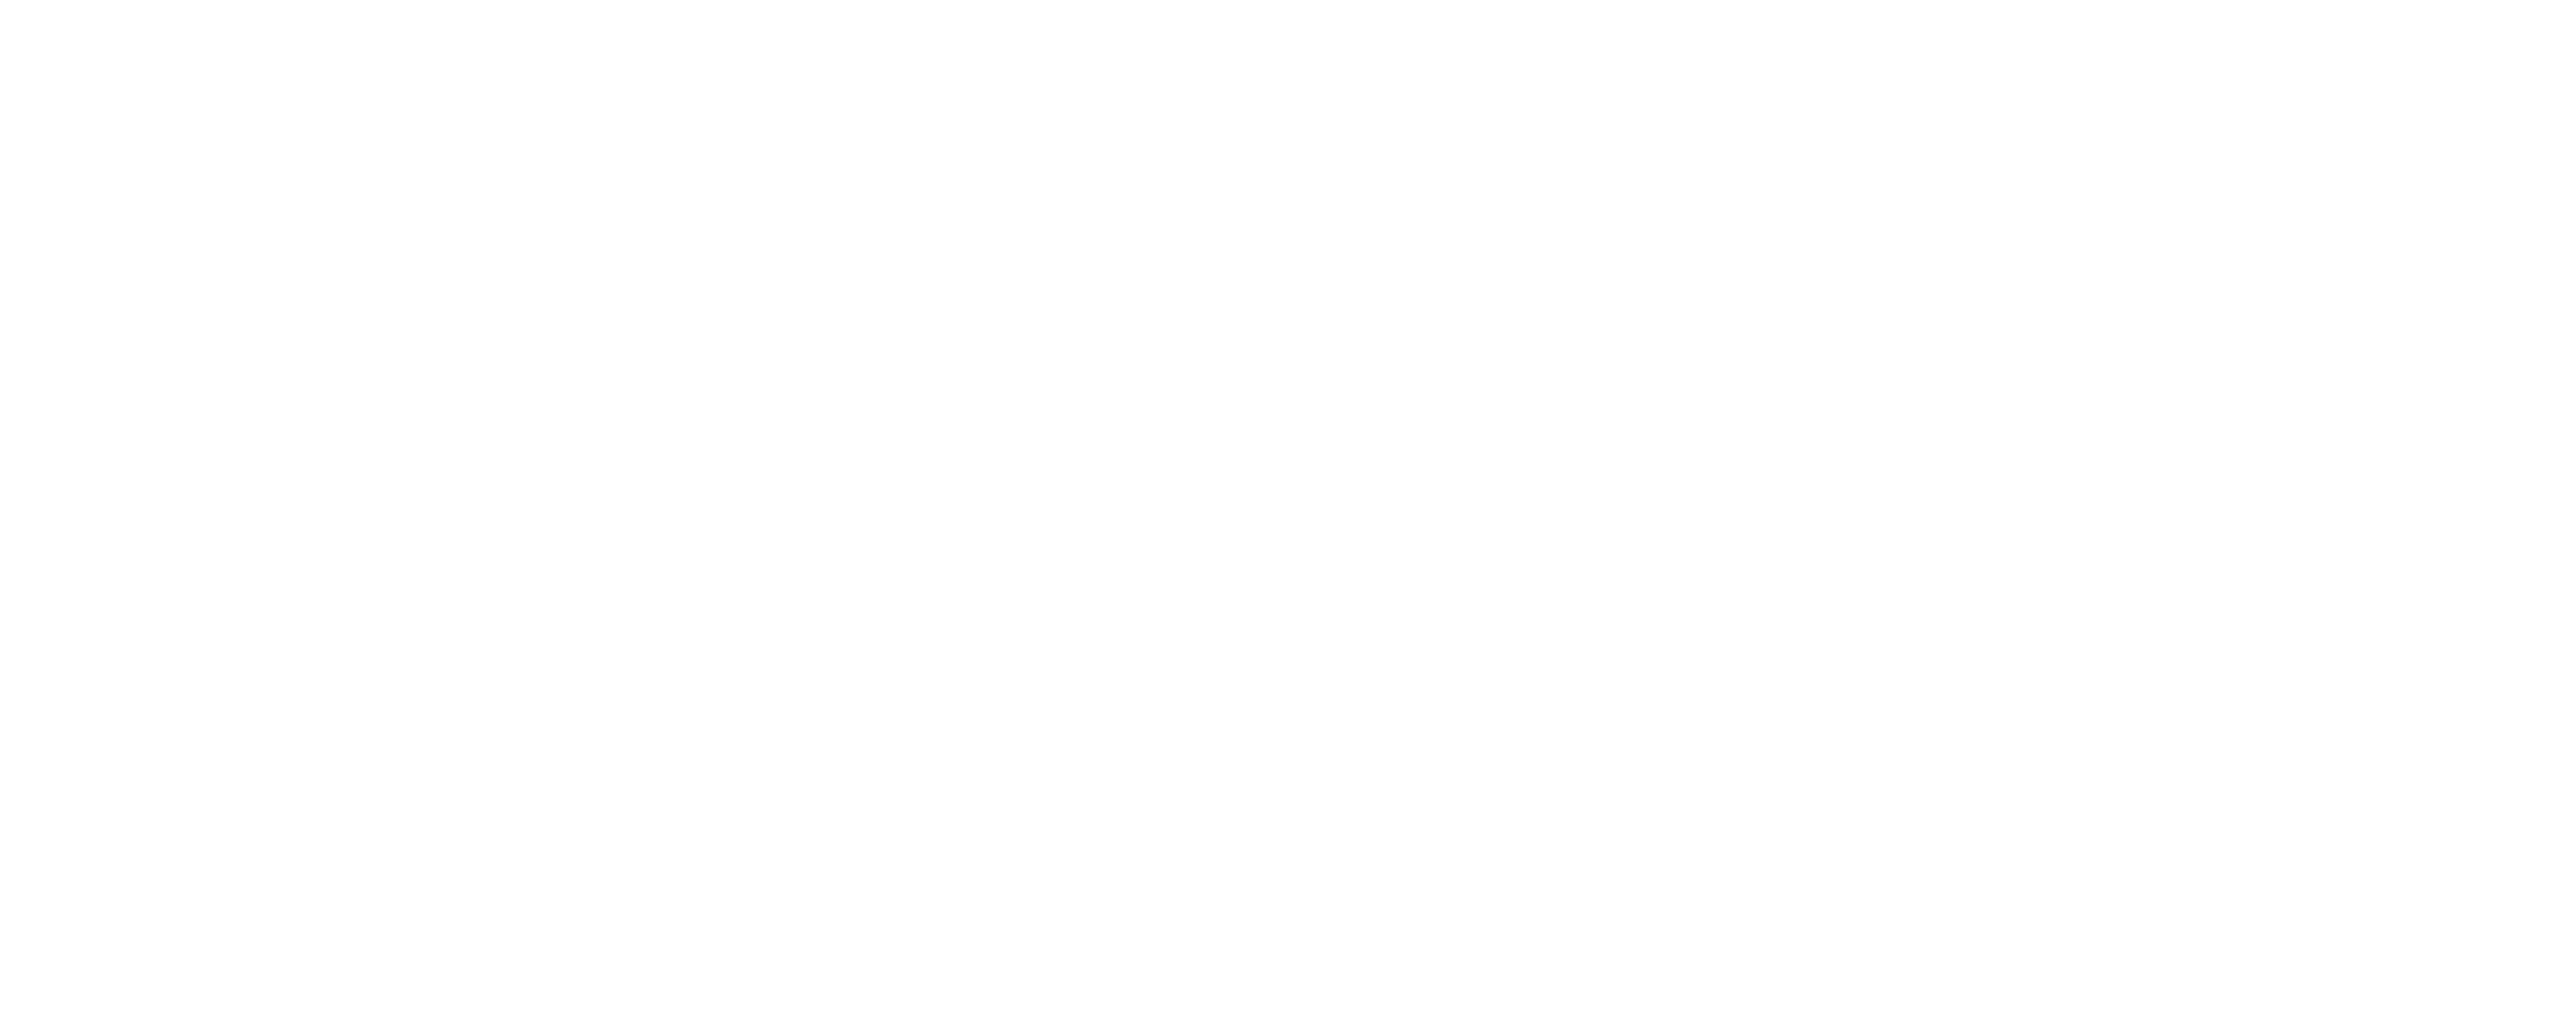 Mike McCarthy music